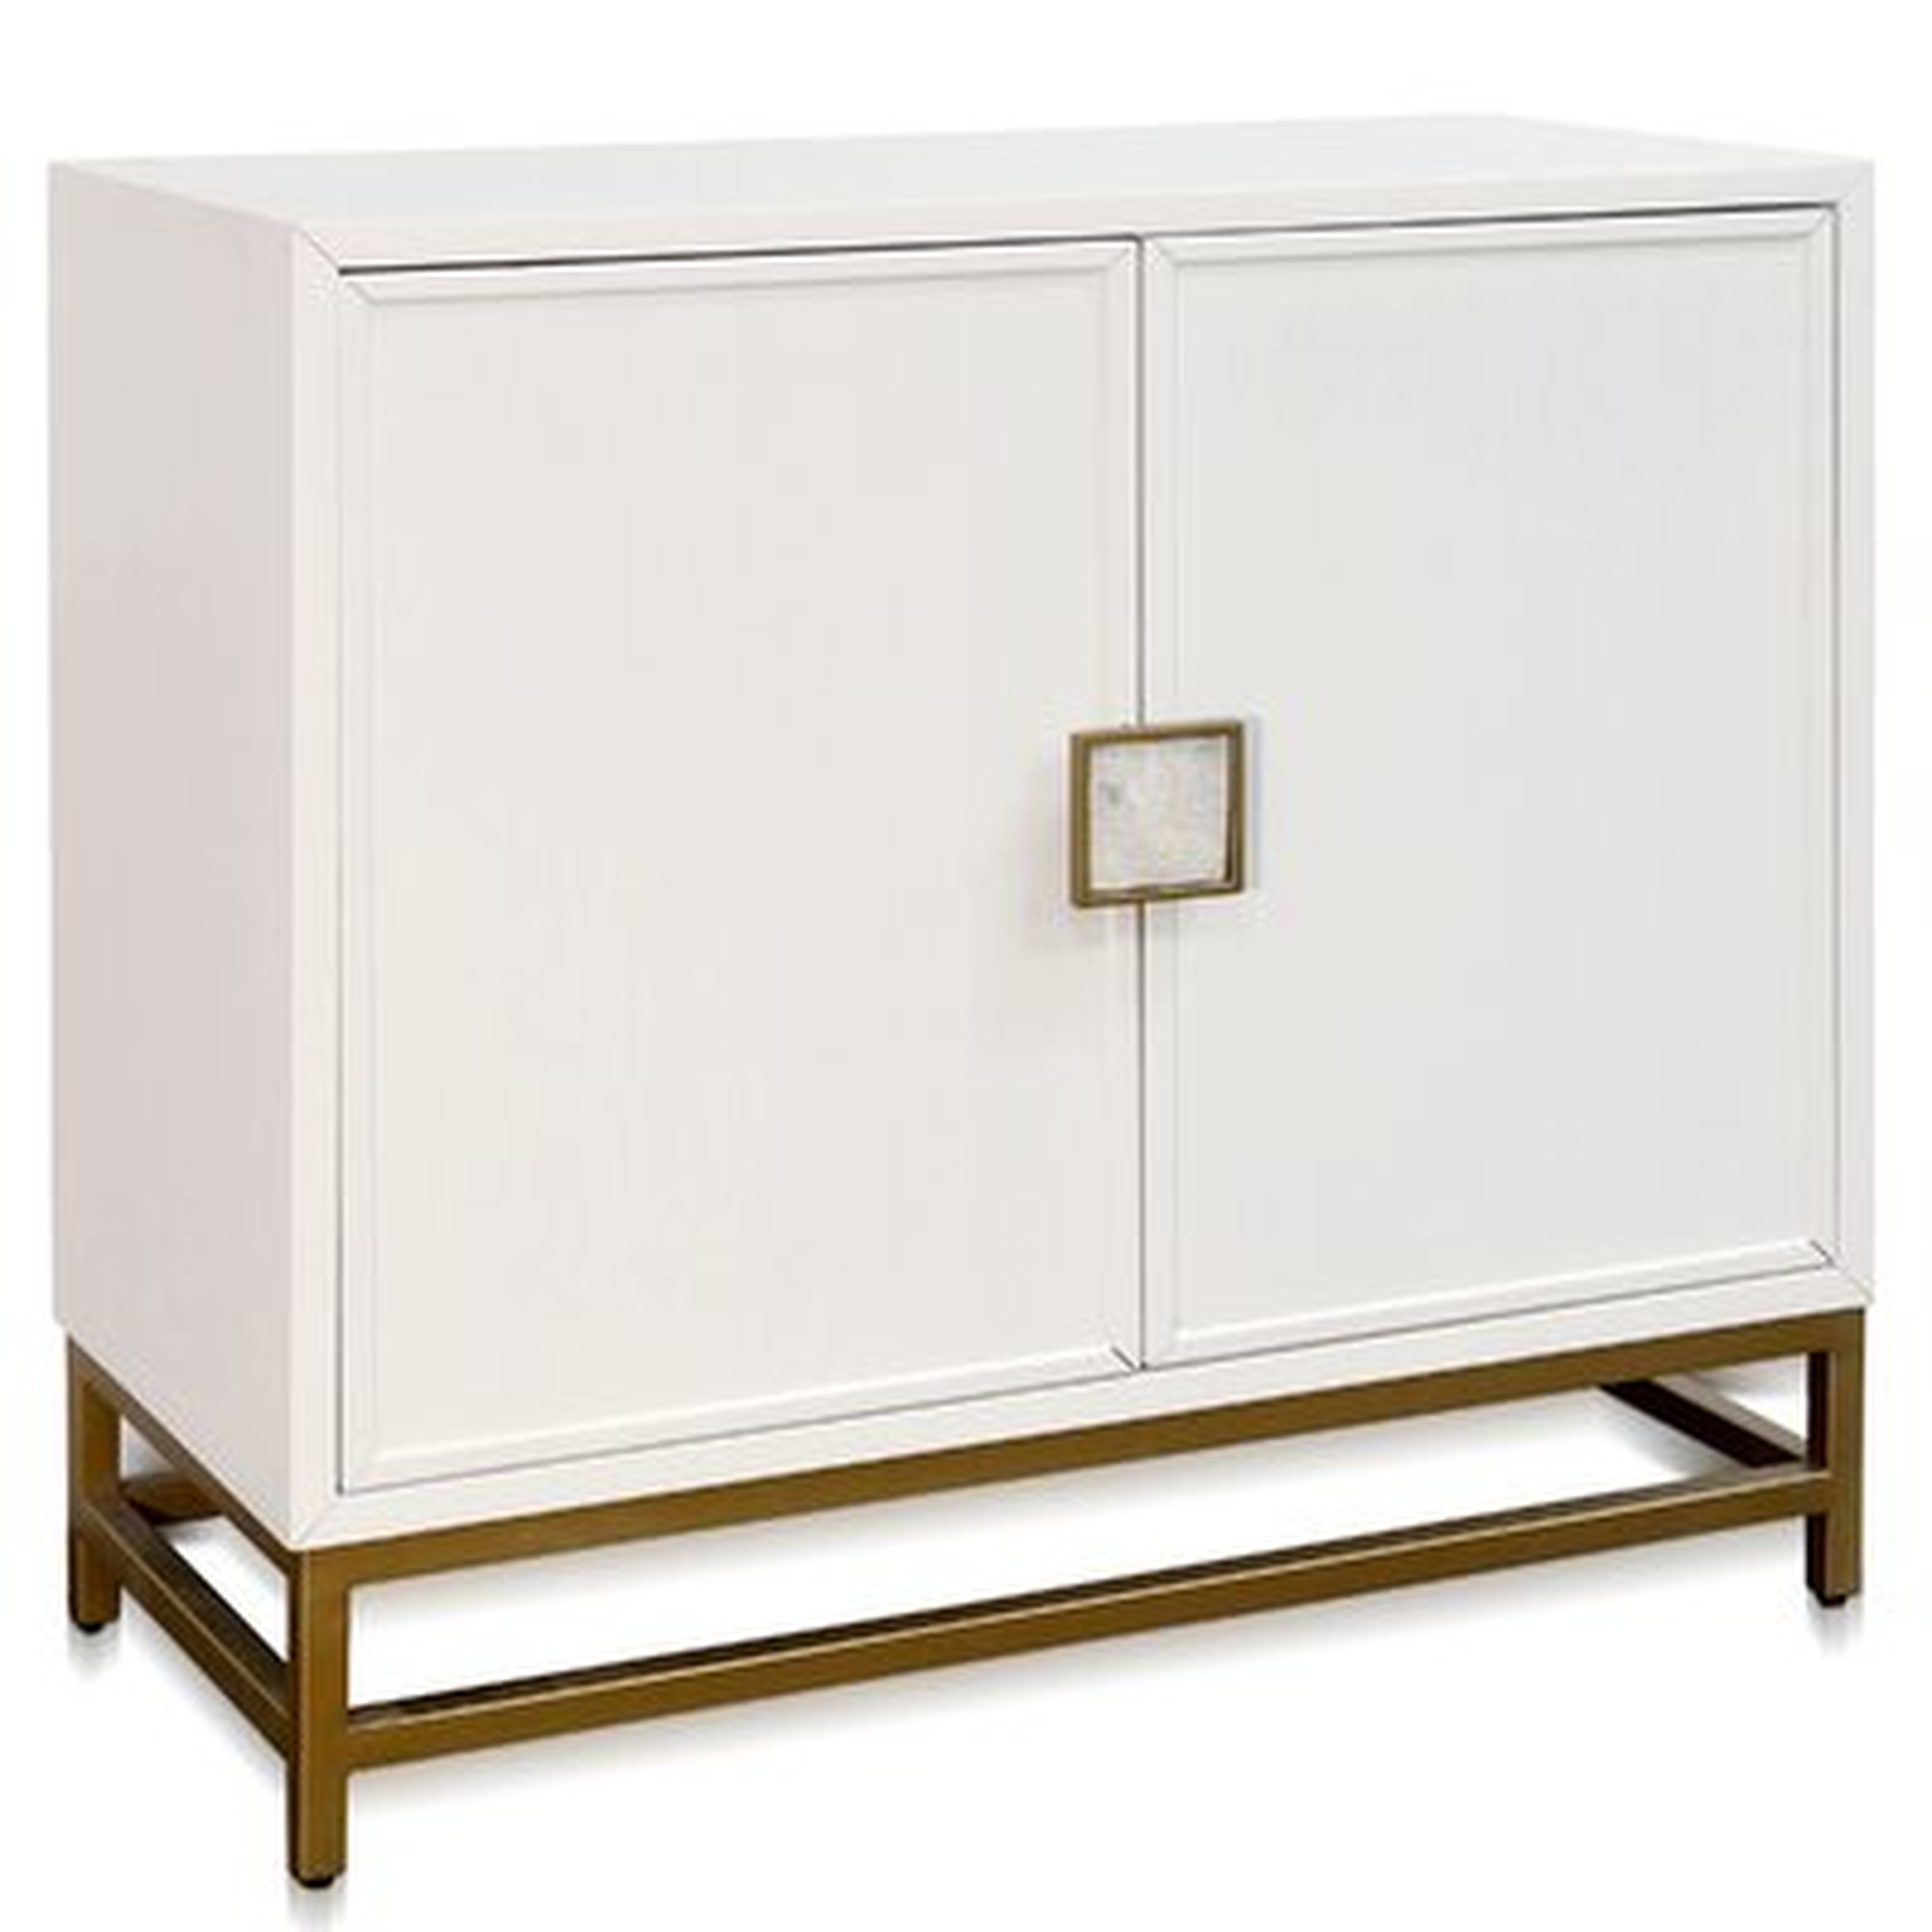 Czerska - Two Door Cabinet With Shell Handles - White Finish - Wayfair